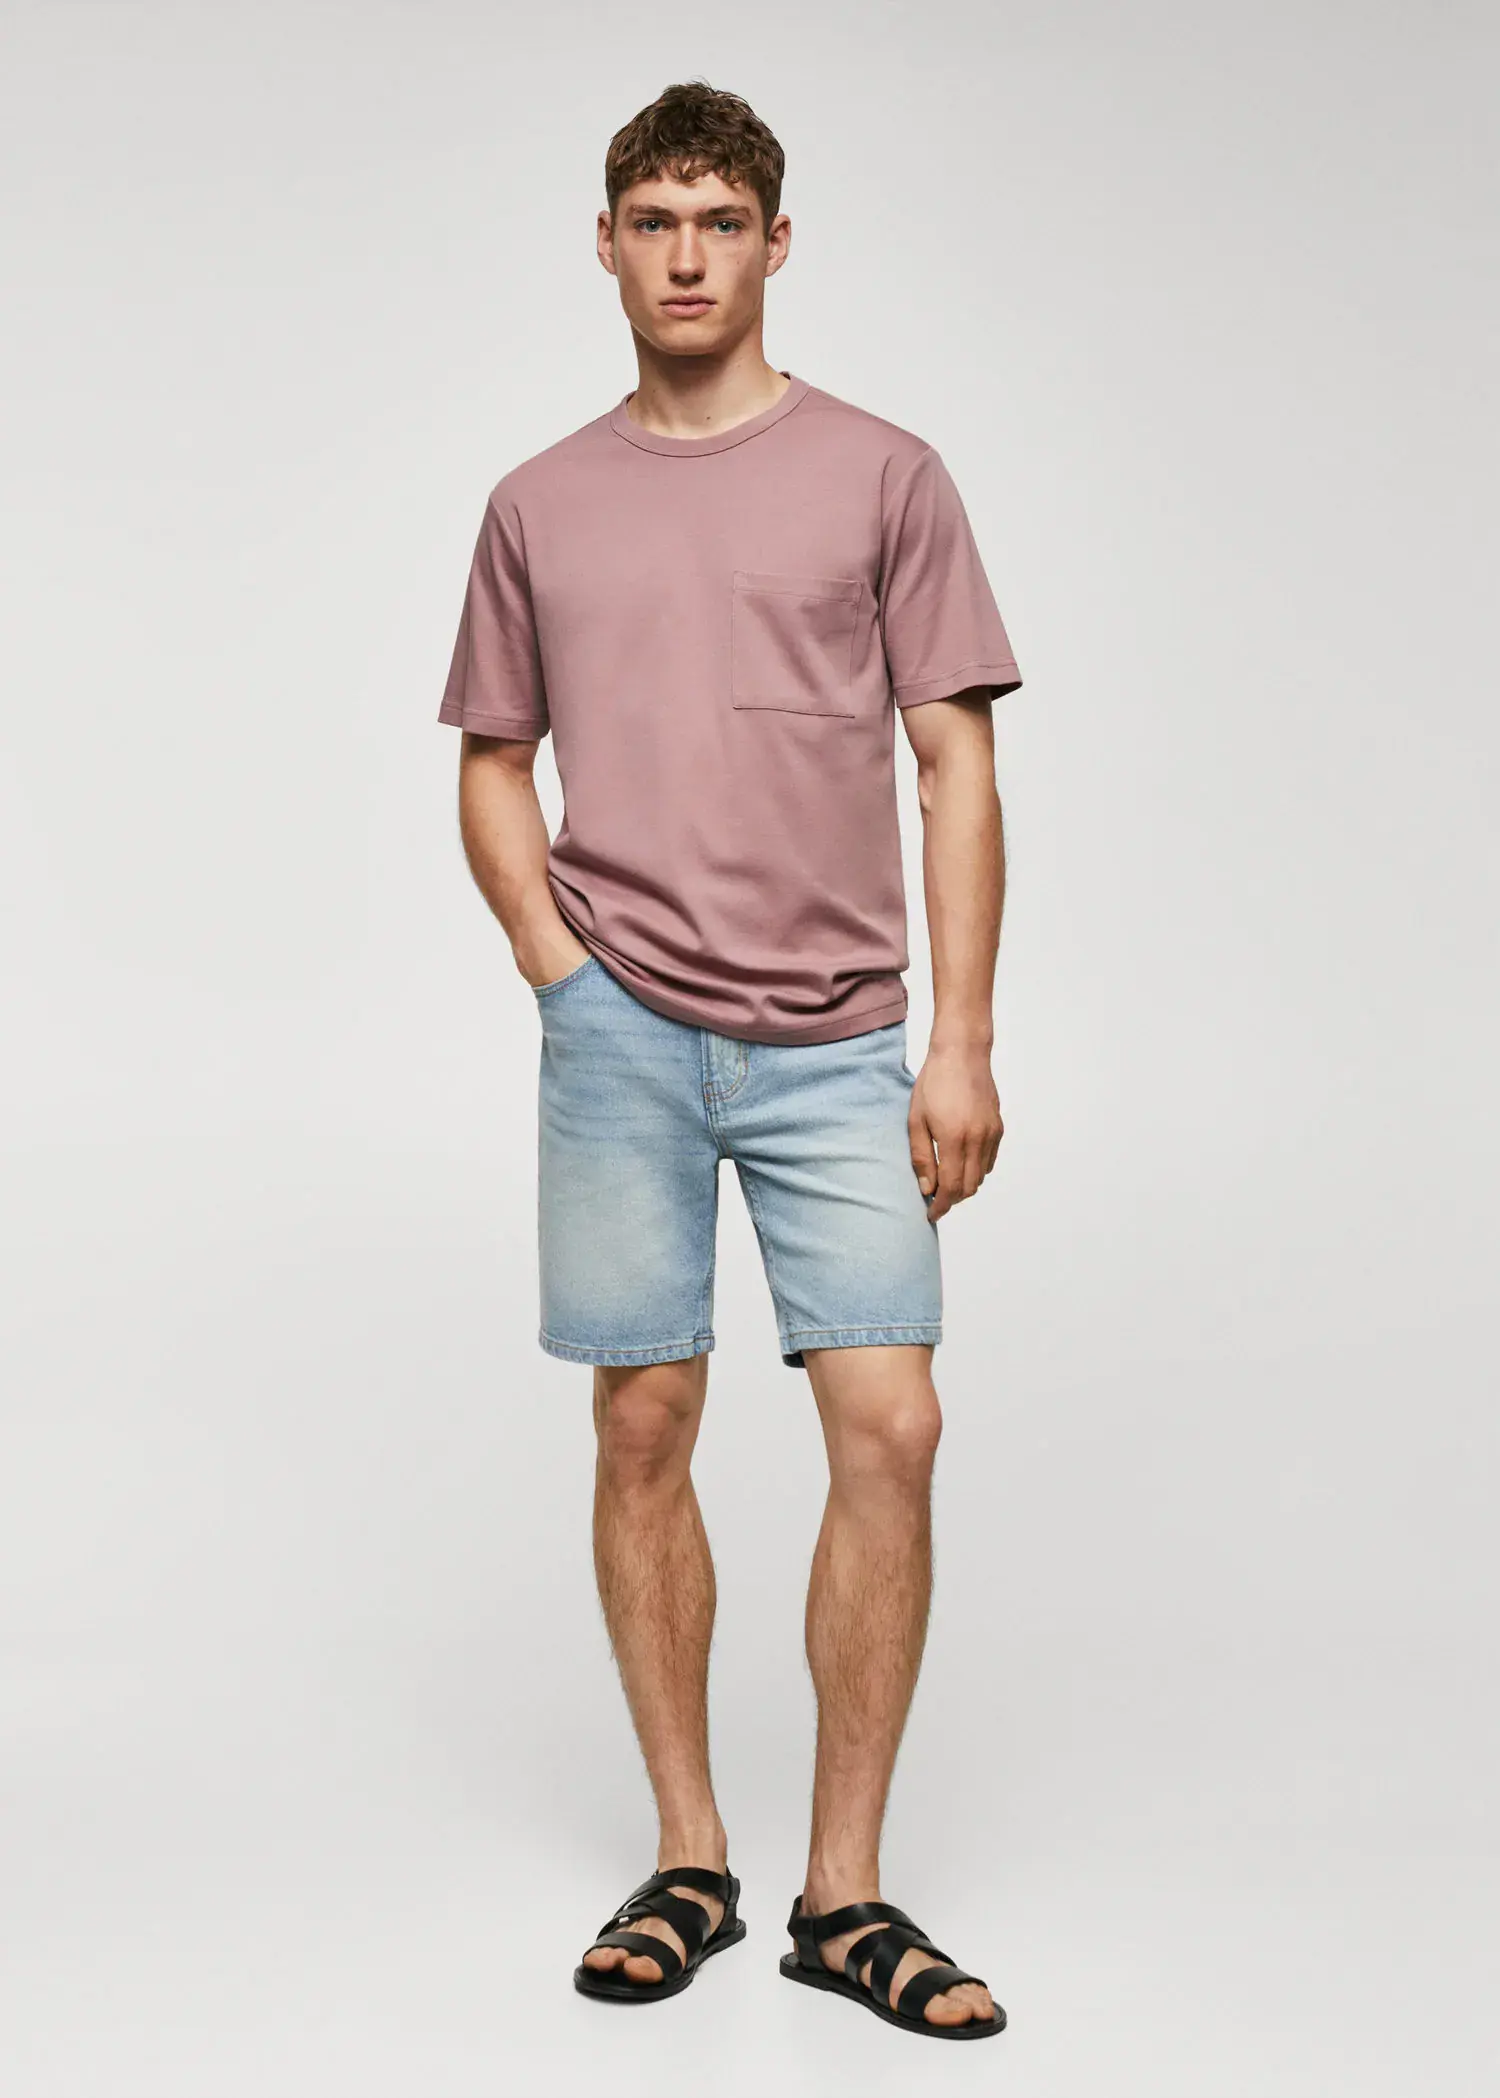 Mango 100% cotton t-shirt with pocket. a man wearing a pink shirt and blue shorts. 